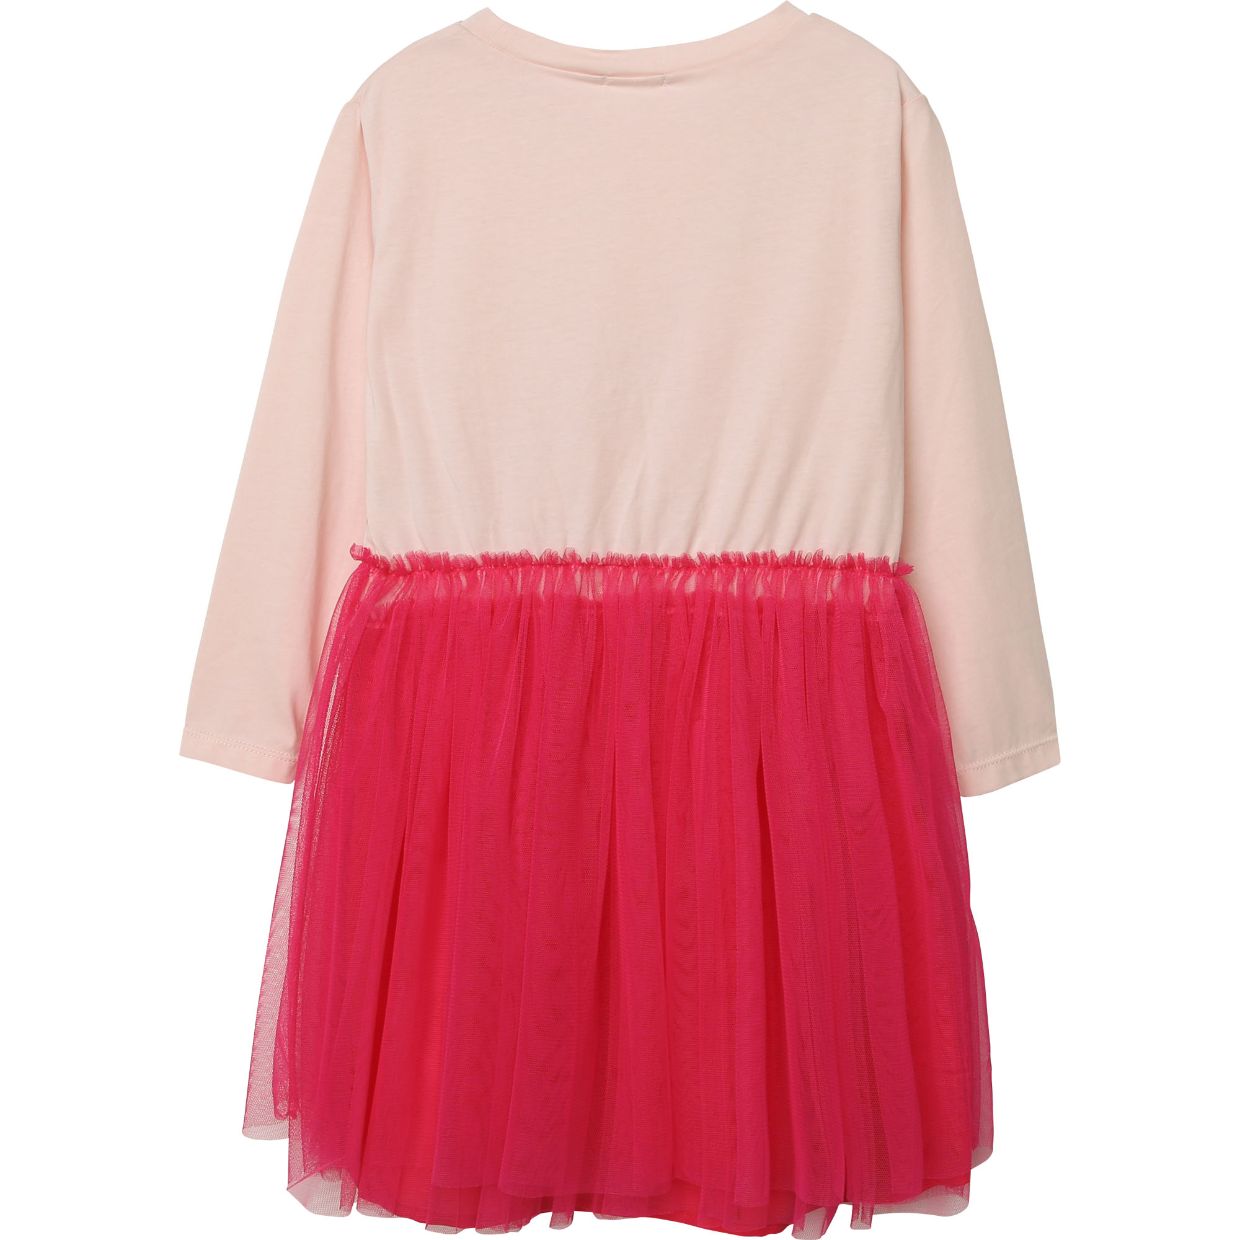 Billieblush Pink Tulle Dress